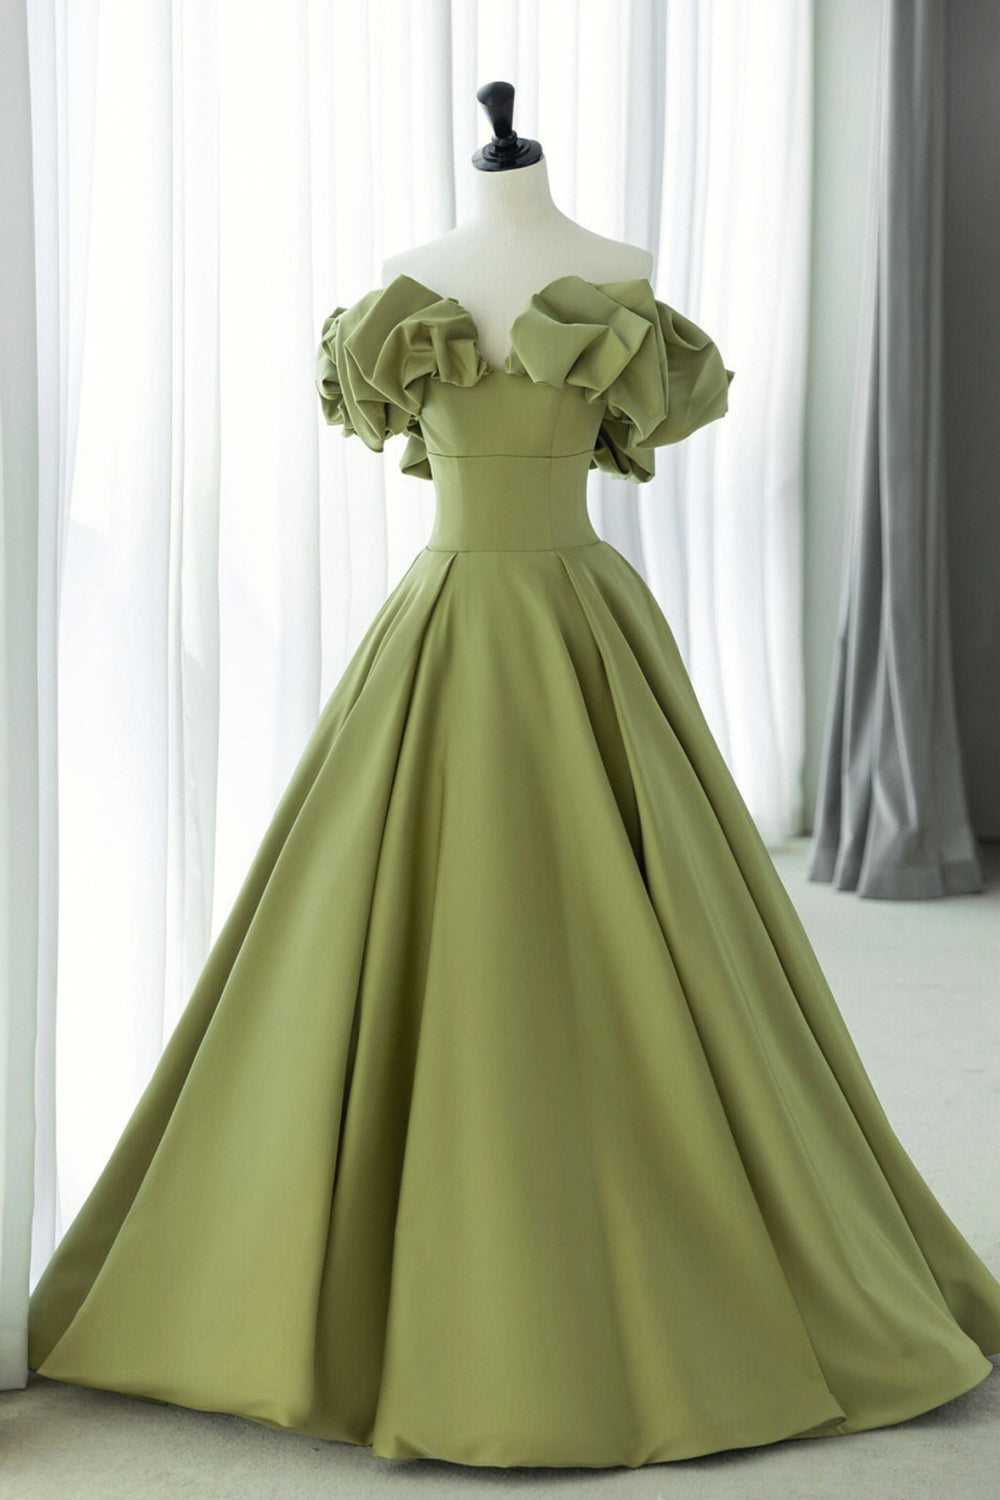 Green Satin Long Prom Dress Outfits For Girls, Green A-Line Evening Dress